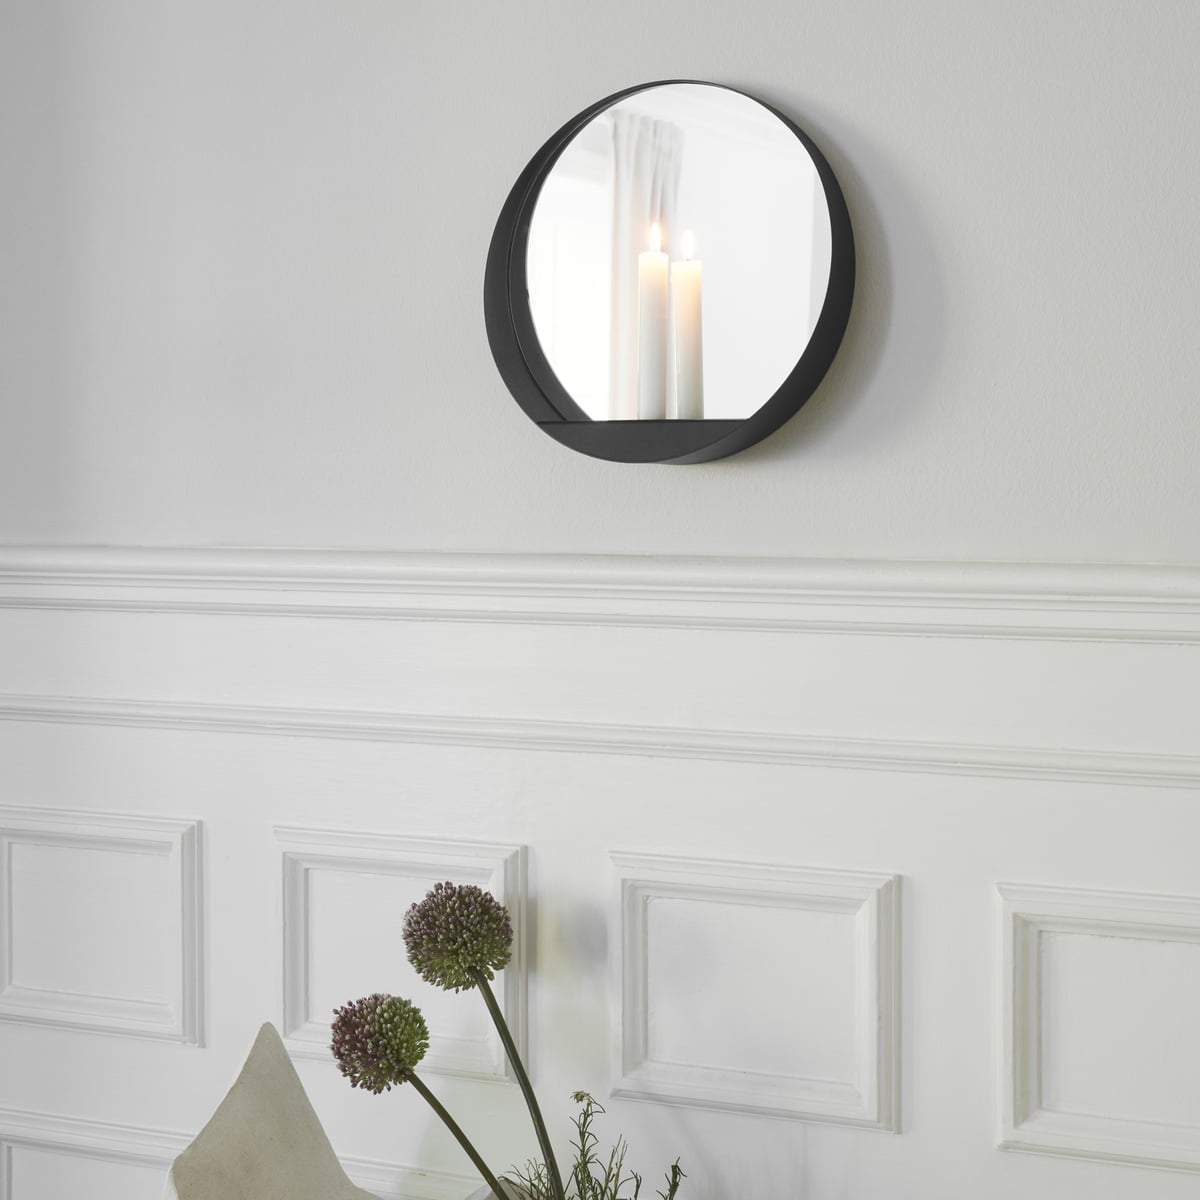 Gejst - Wall Glim Candle Mirror Ø 28 cm, Black